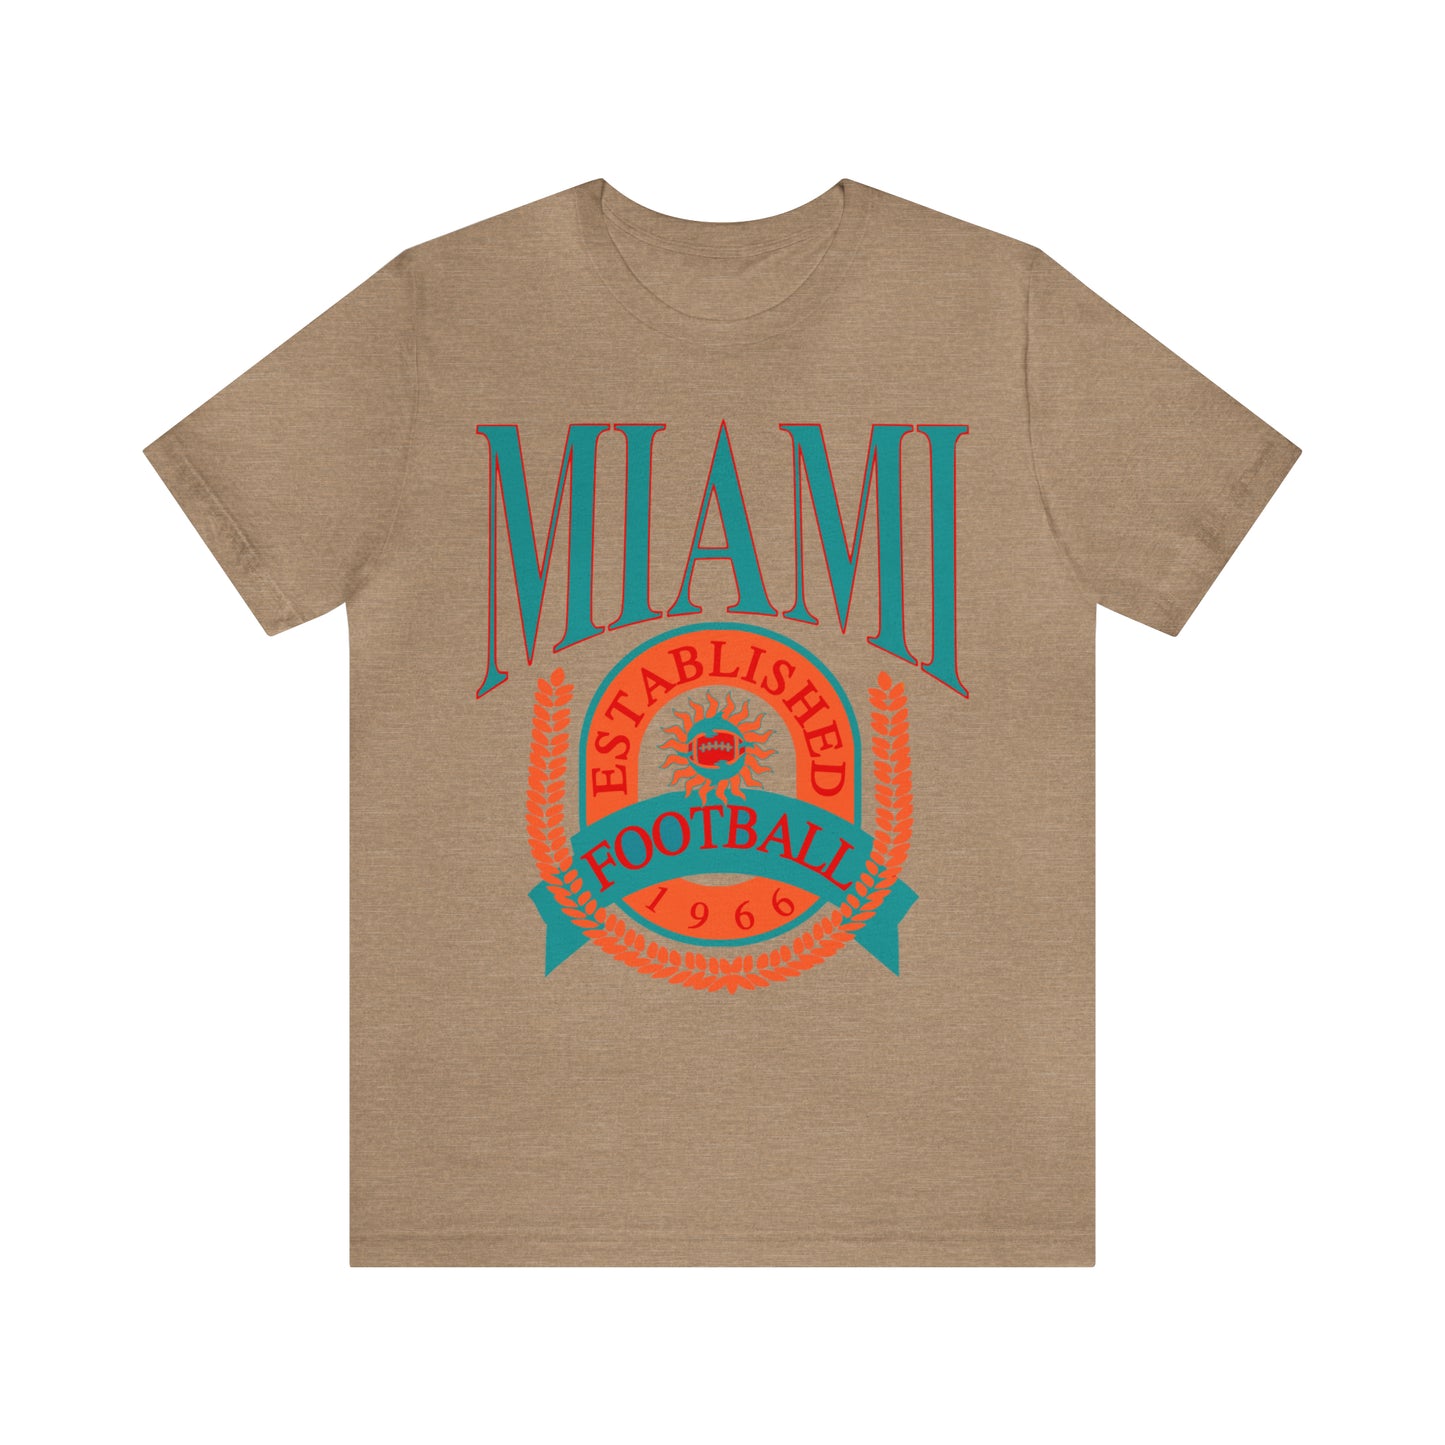 Vintage Miami Dolphins Football Tee  - Vintage Style Football Crewneck - Men's & Women's Football Apparel - Design 1